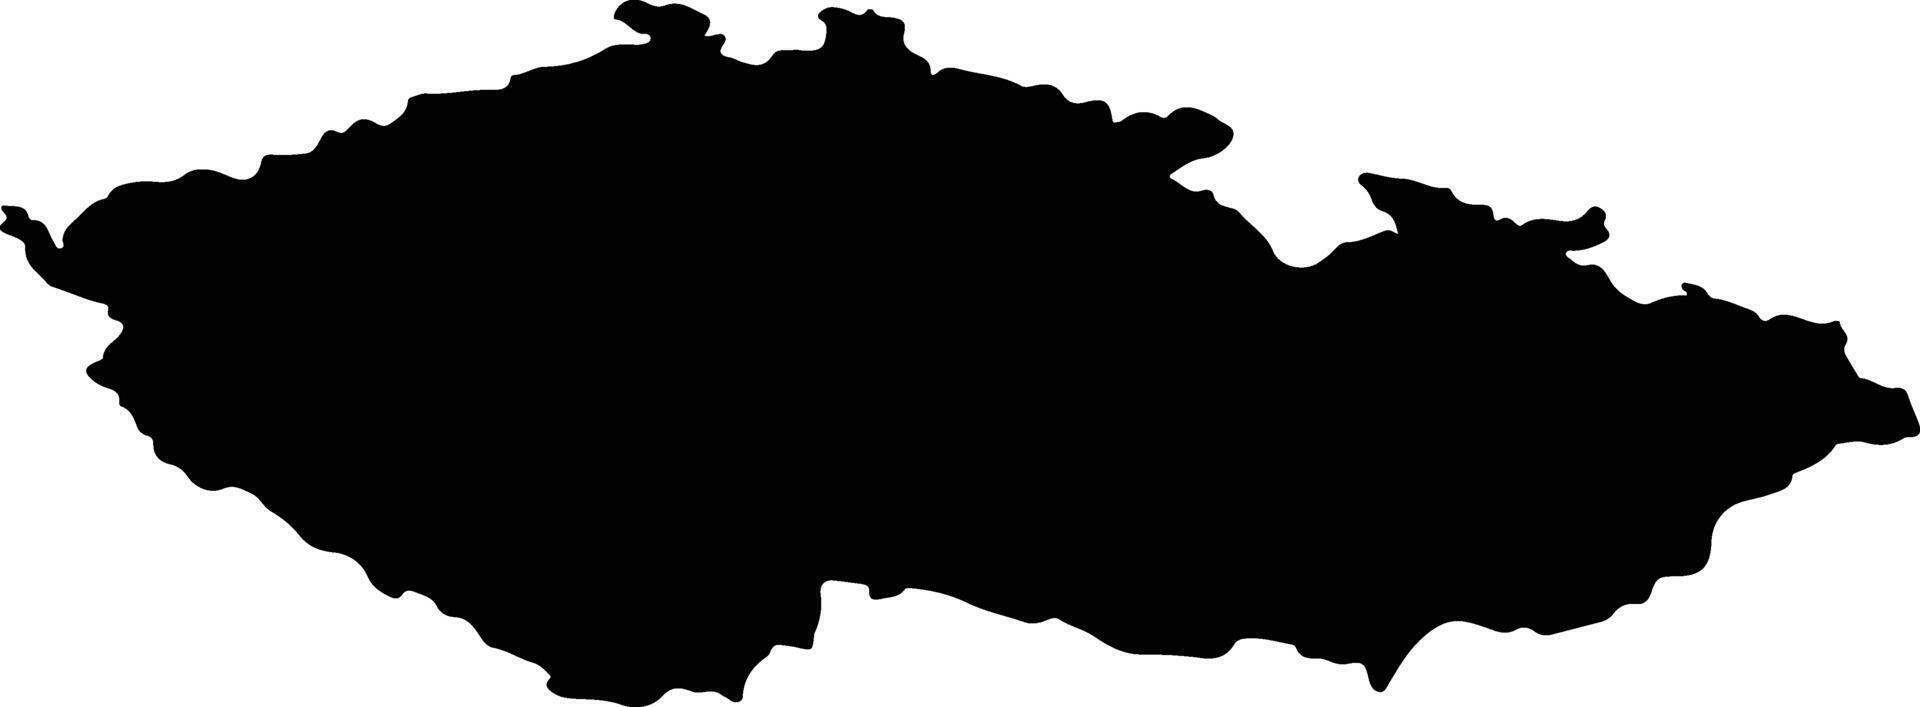 Tsjechië silhouet kaart vector